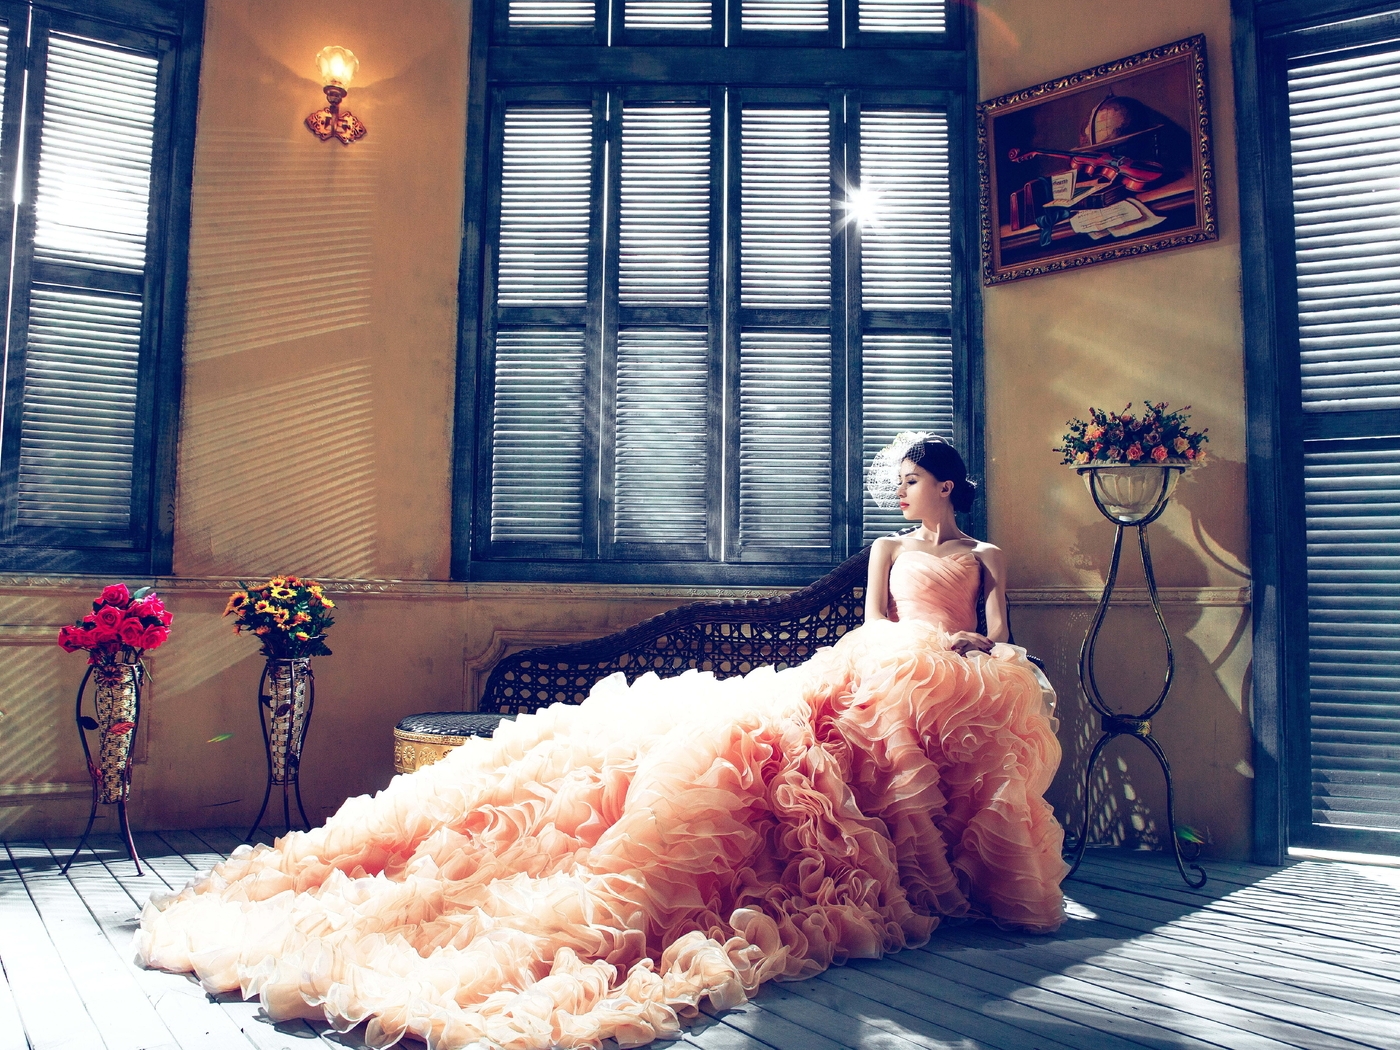 Image: Girl, sitting, dress, chic, room, interior, flowers, poses